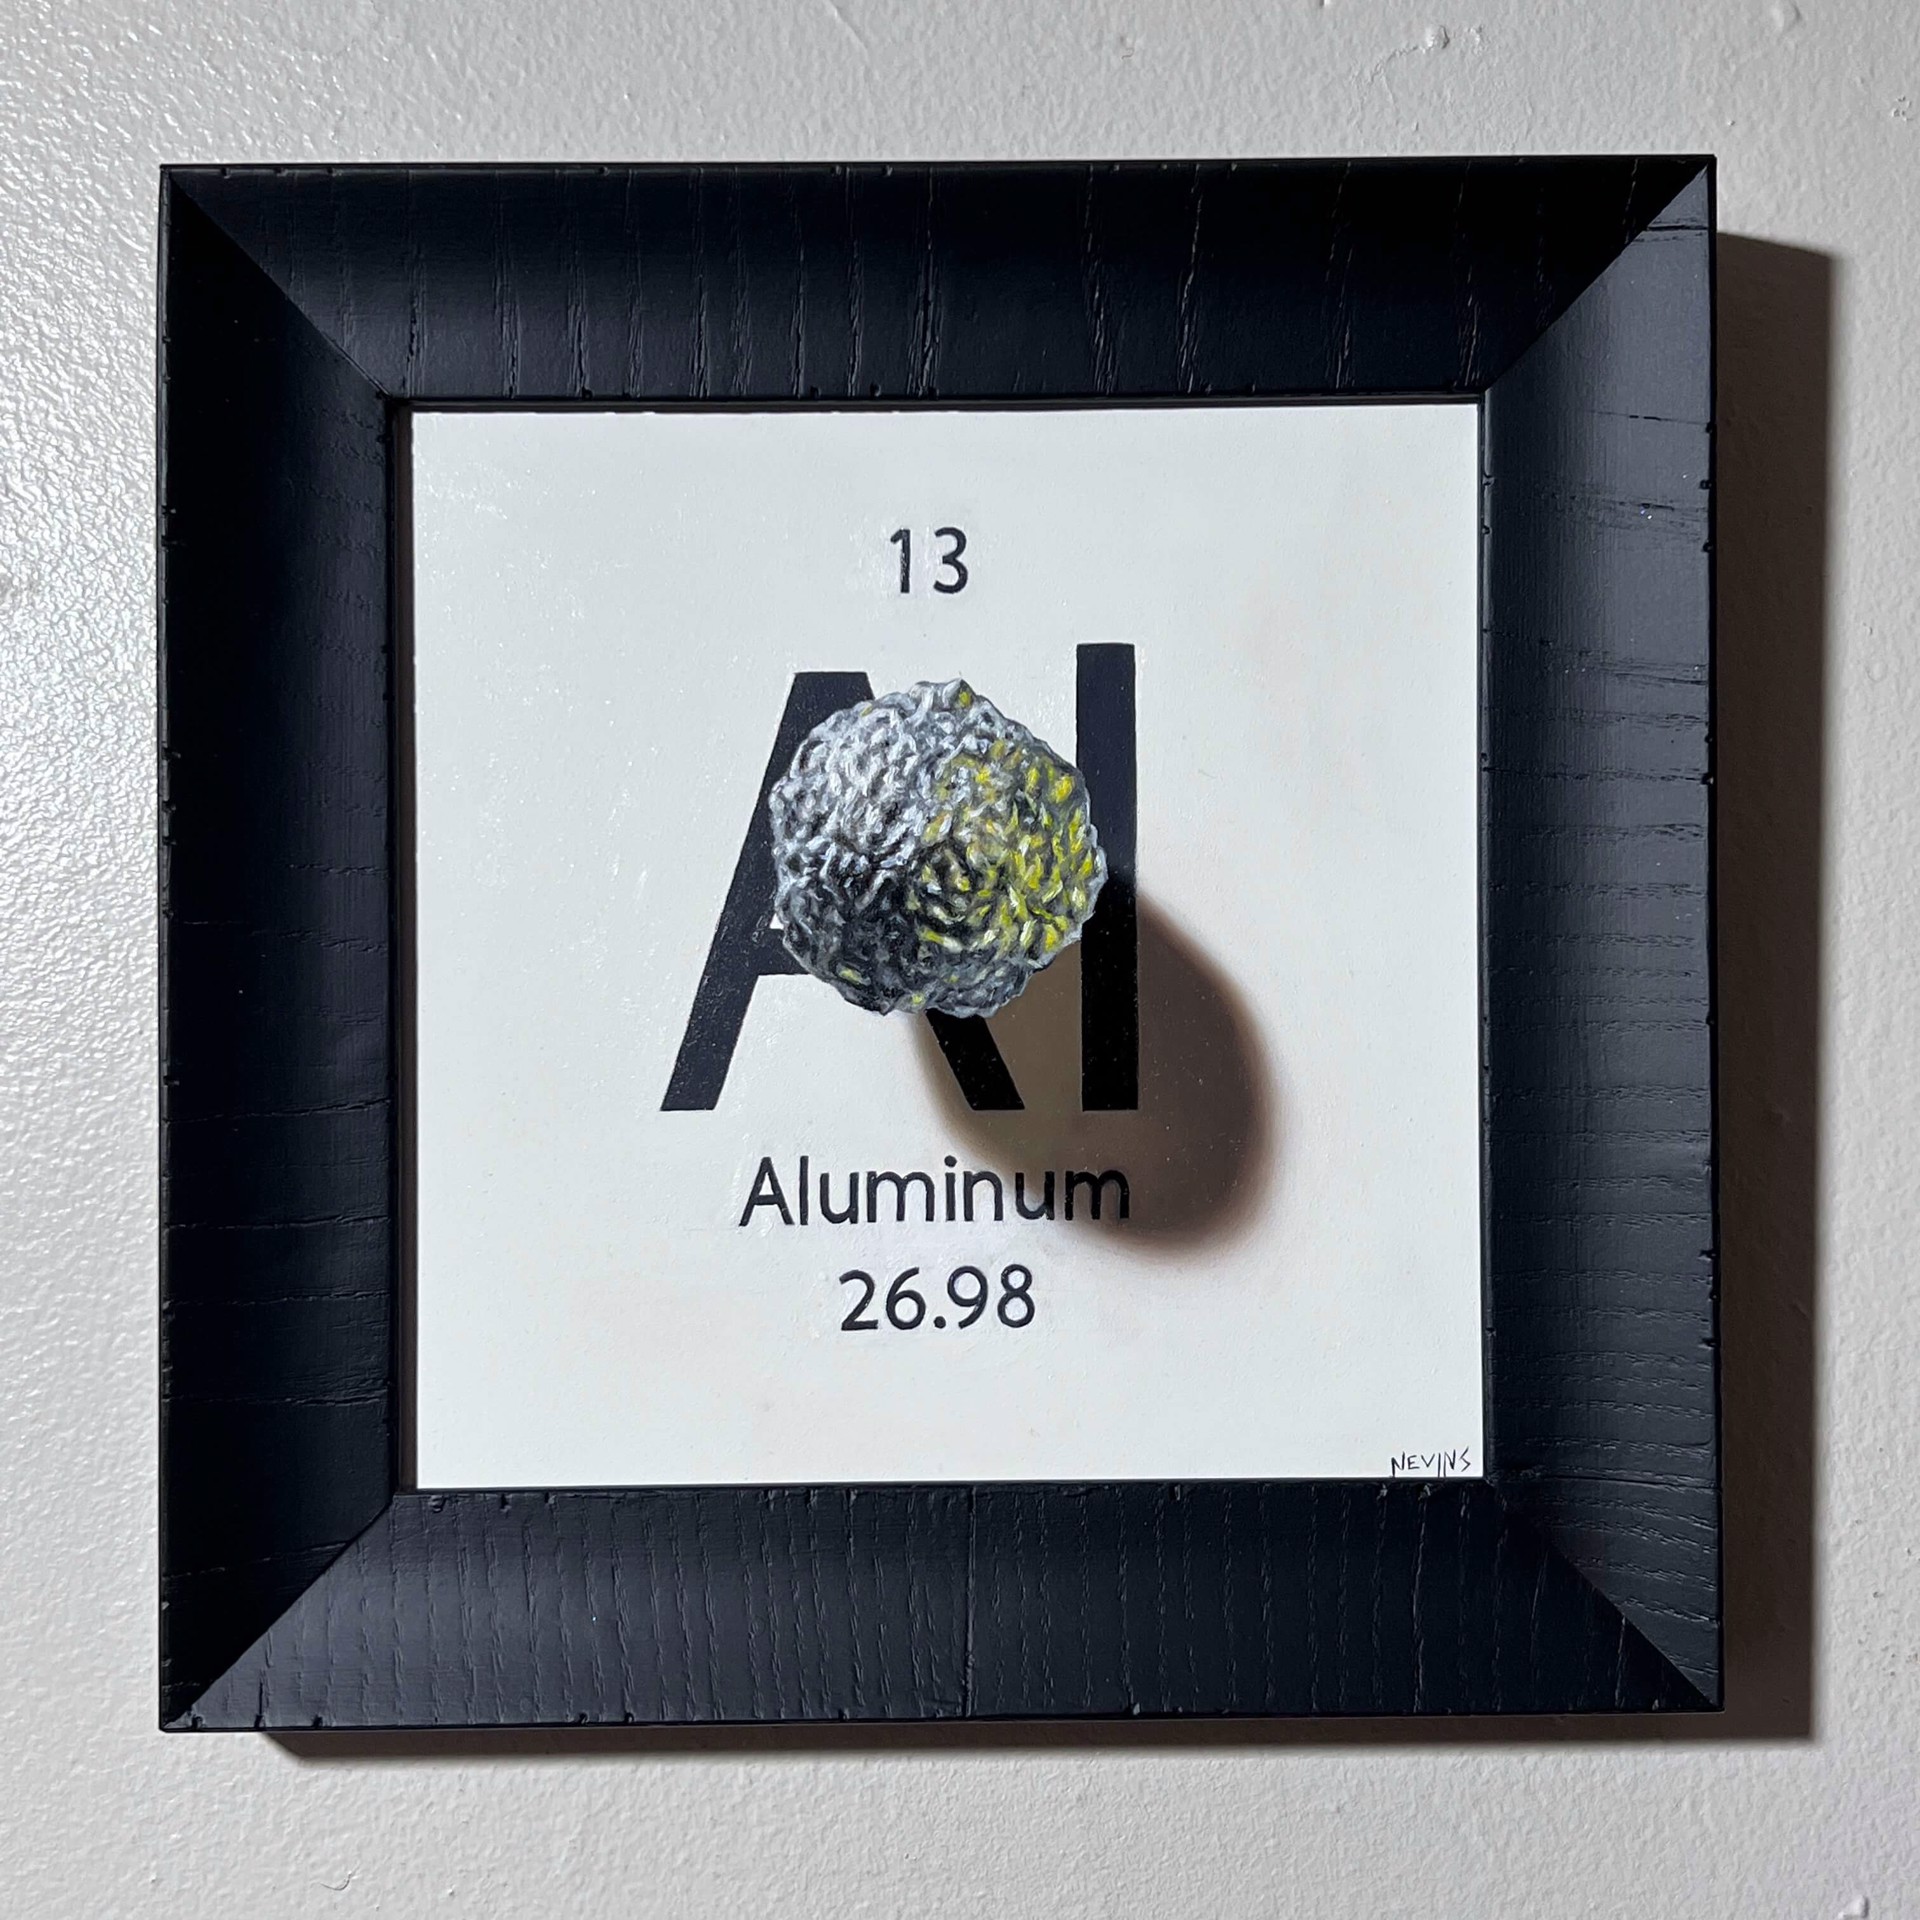 Aluminum by Patrick Nevins